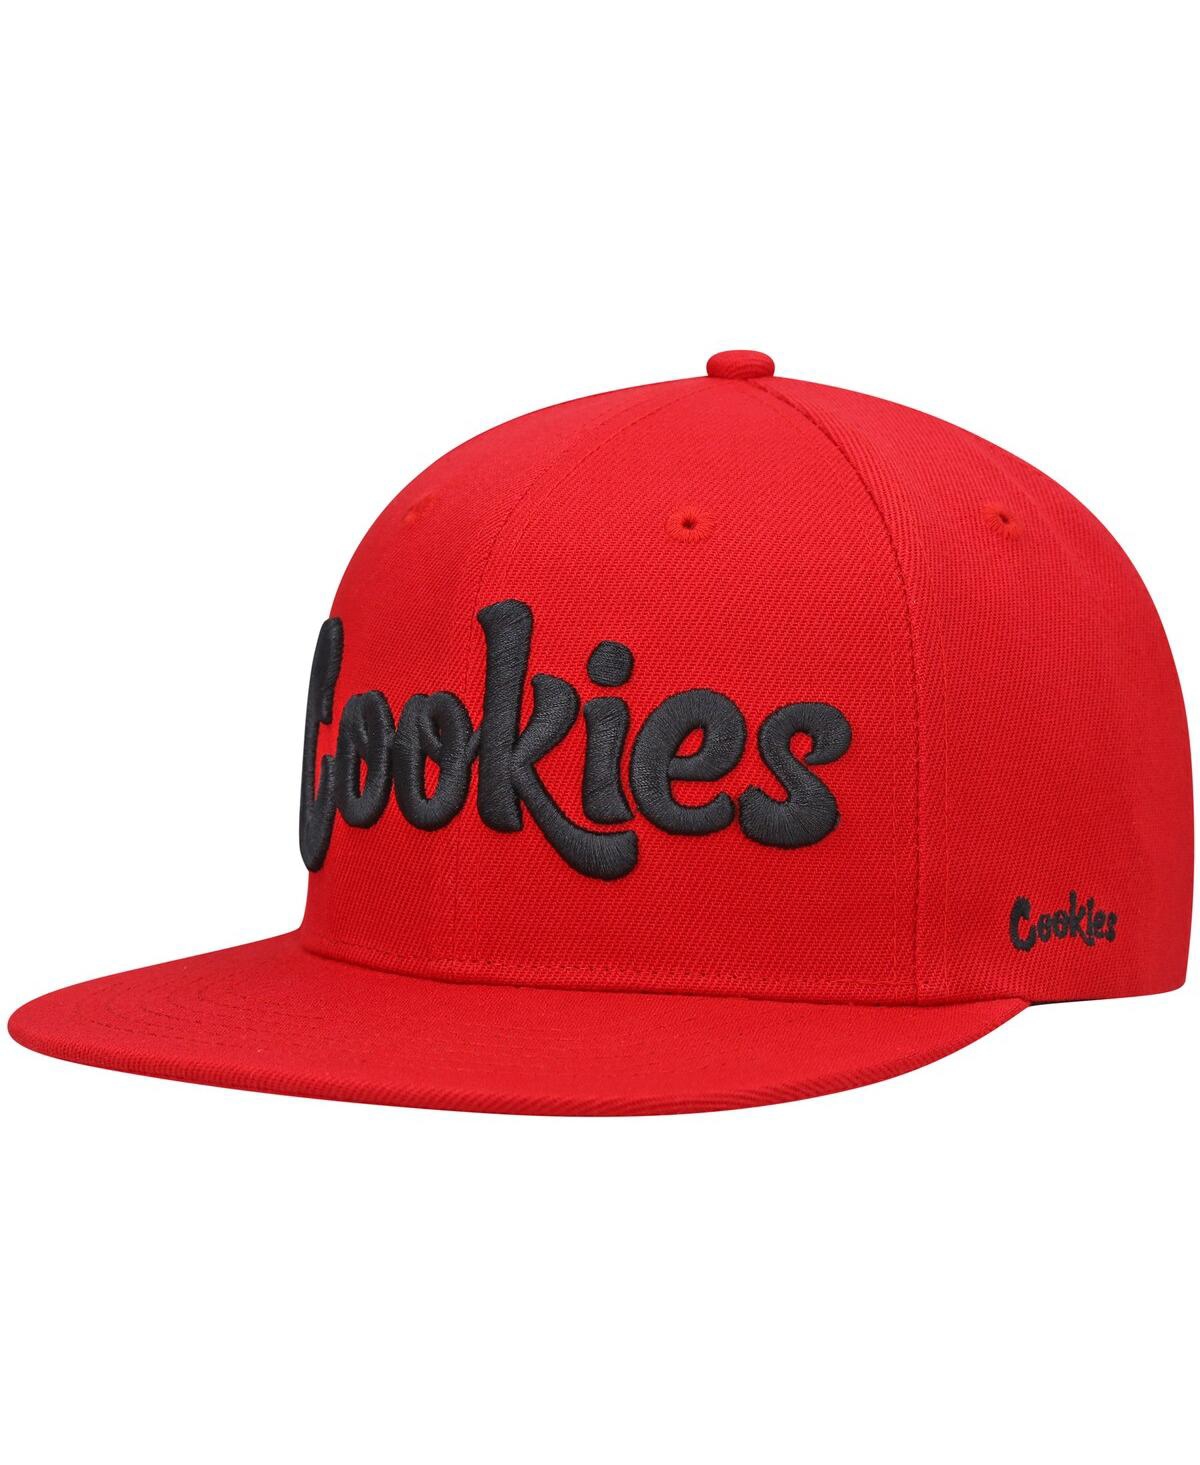 Men's Cookies Red Original Mint Solid Logo Snapback Hat - Red